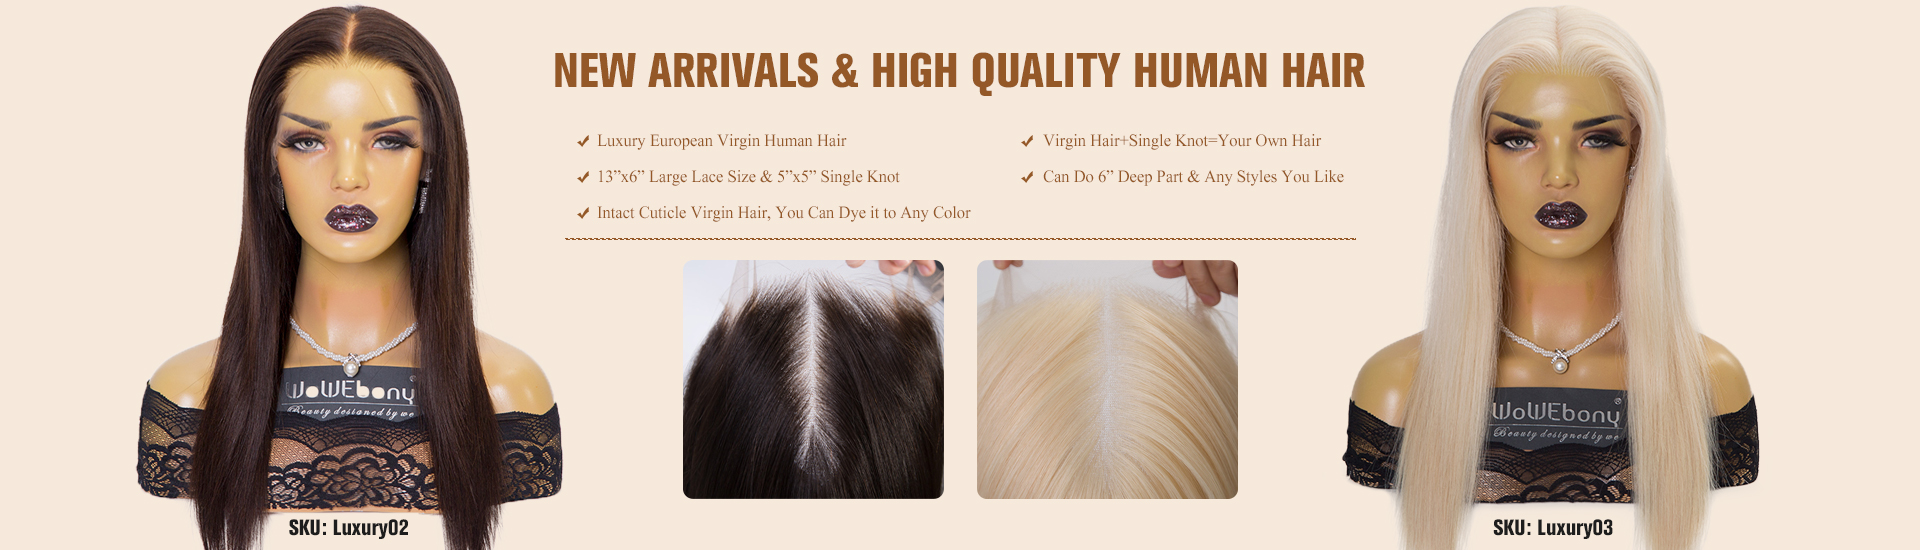 New Arrivals High Quality HD Human Hair Wigs